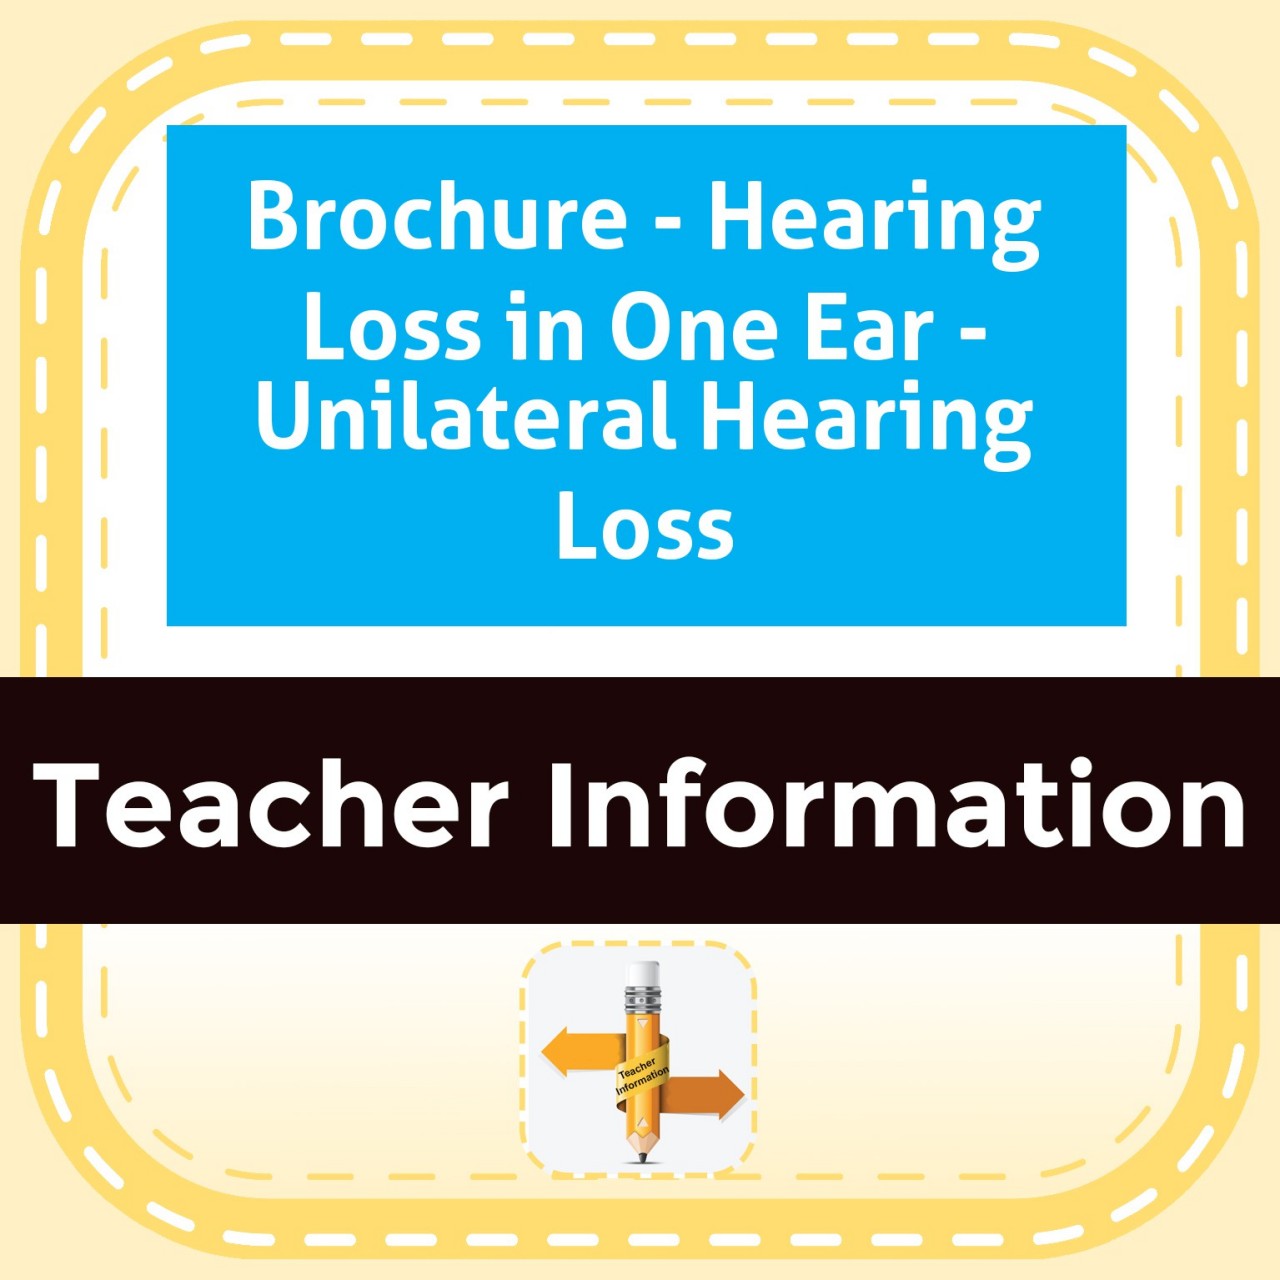 Brochure - Hearing Loss in One Ear - Unilateral Hearing Loss